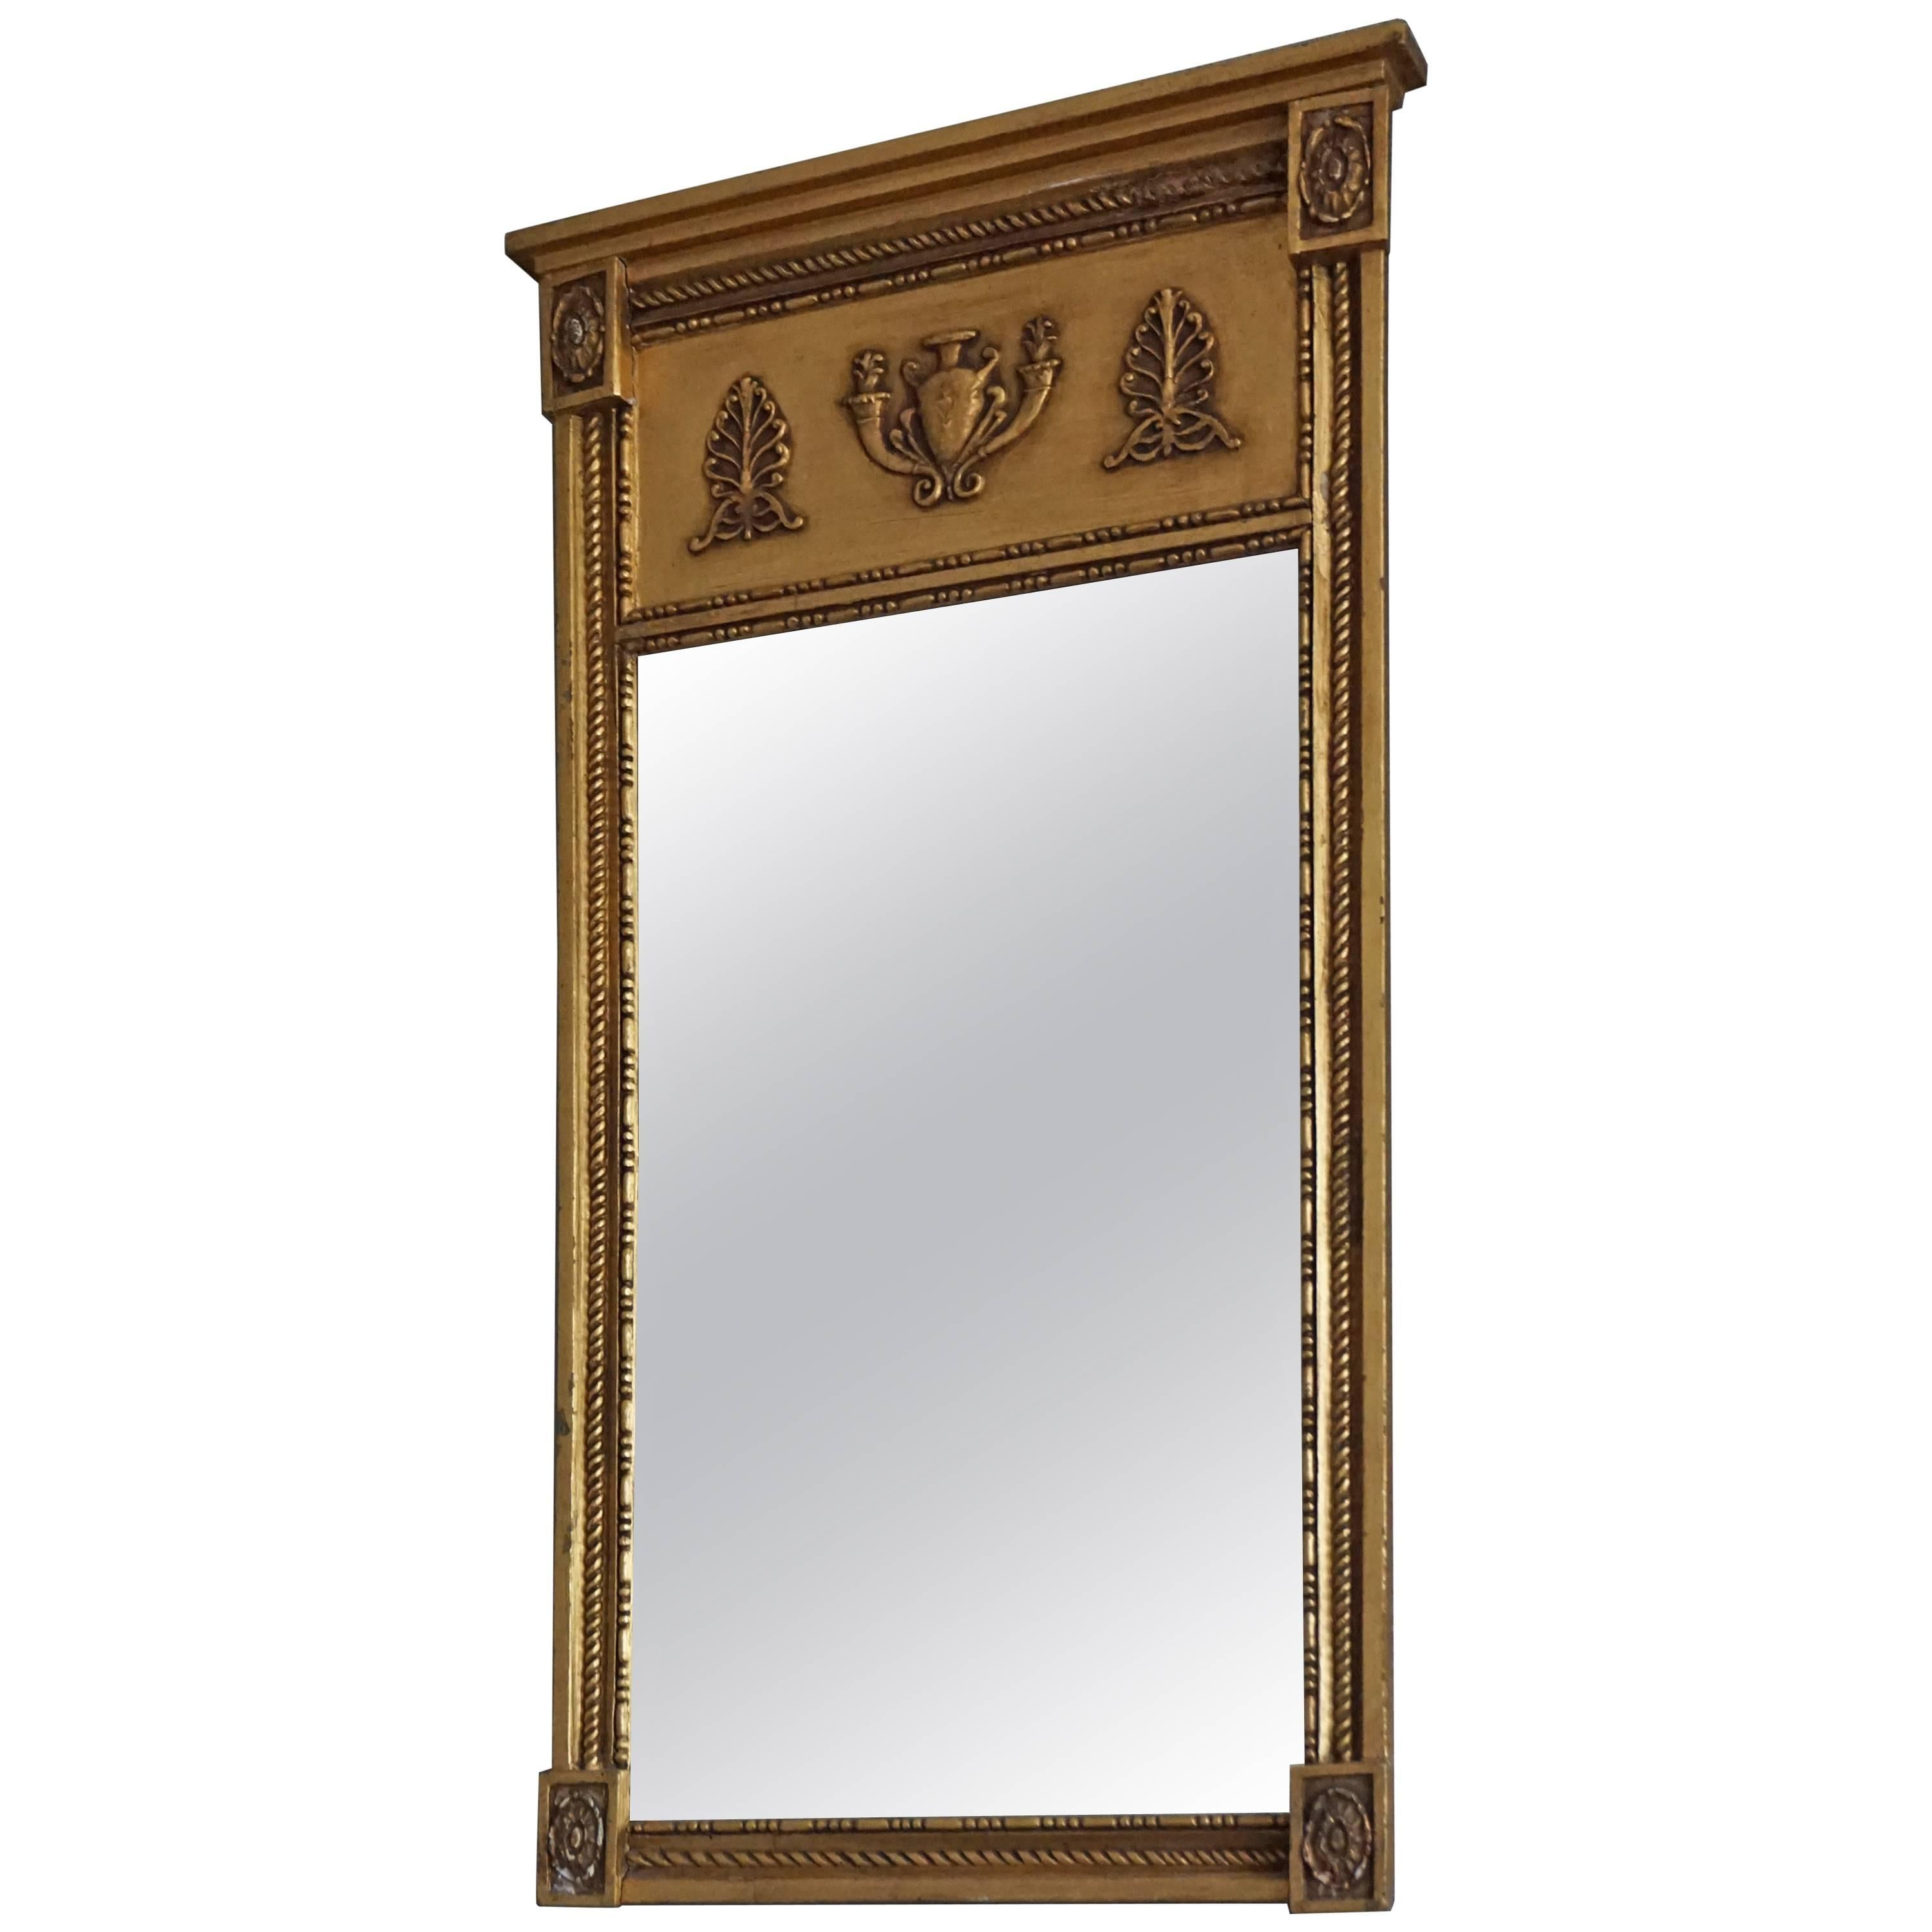 Mid-19th Century Antique and Gilt Empire/Napoleonic Style Mirror